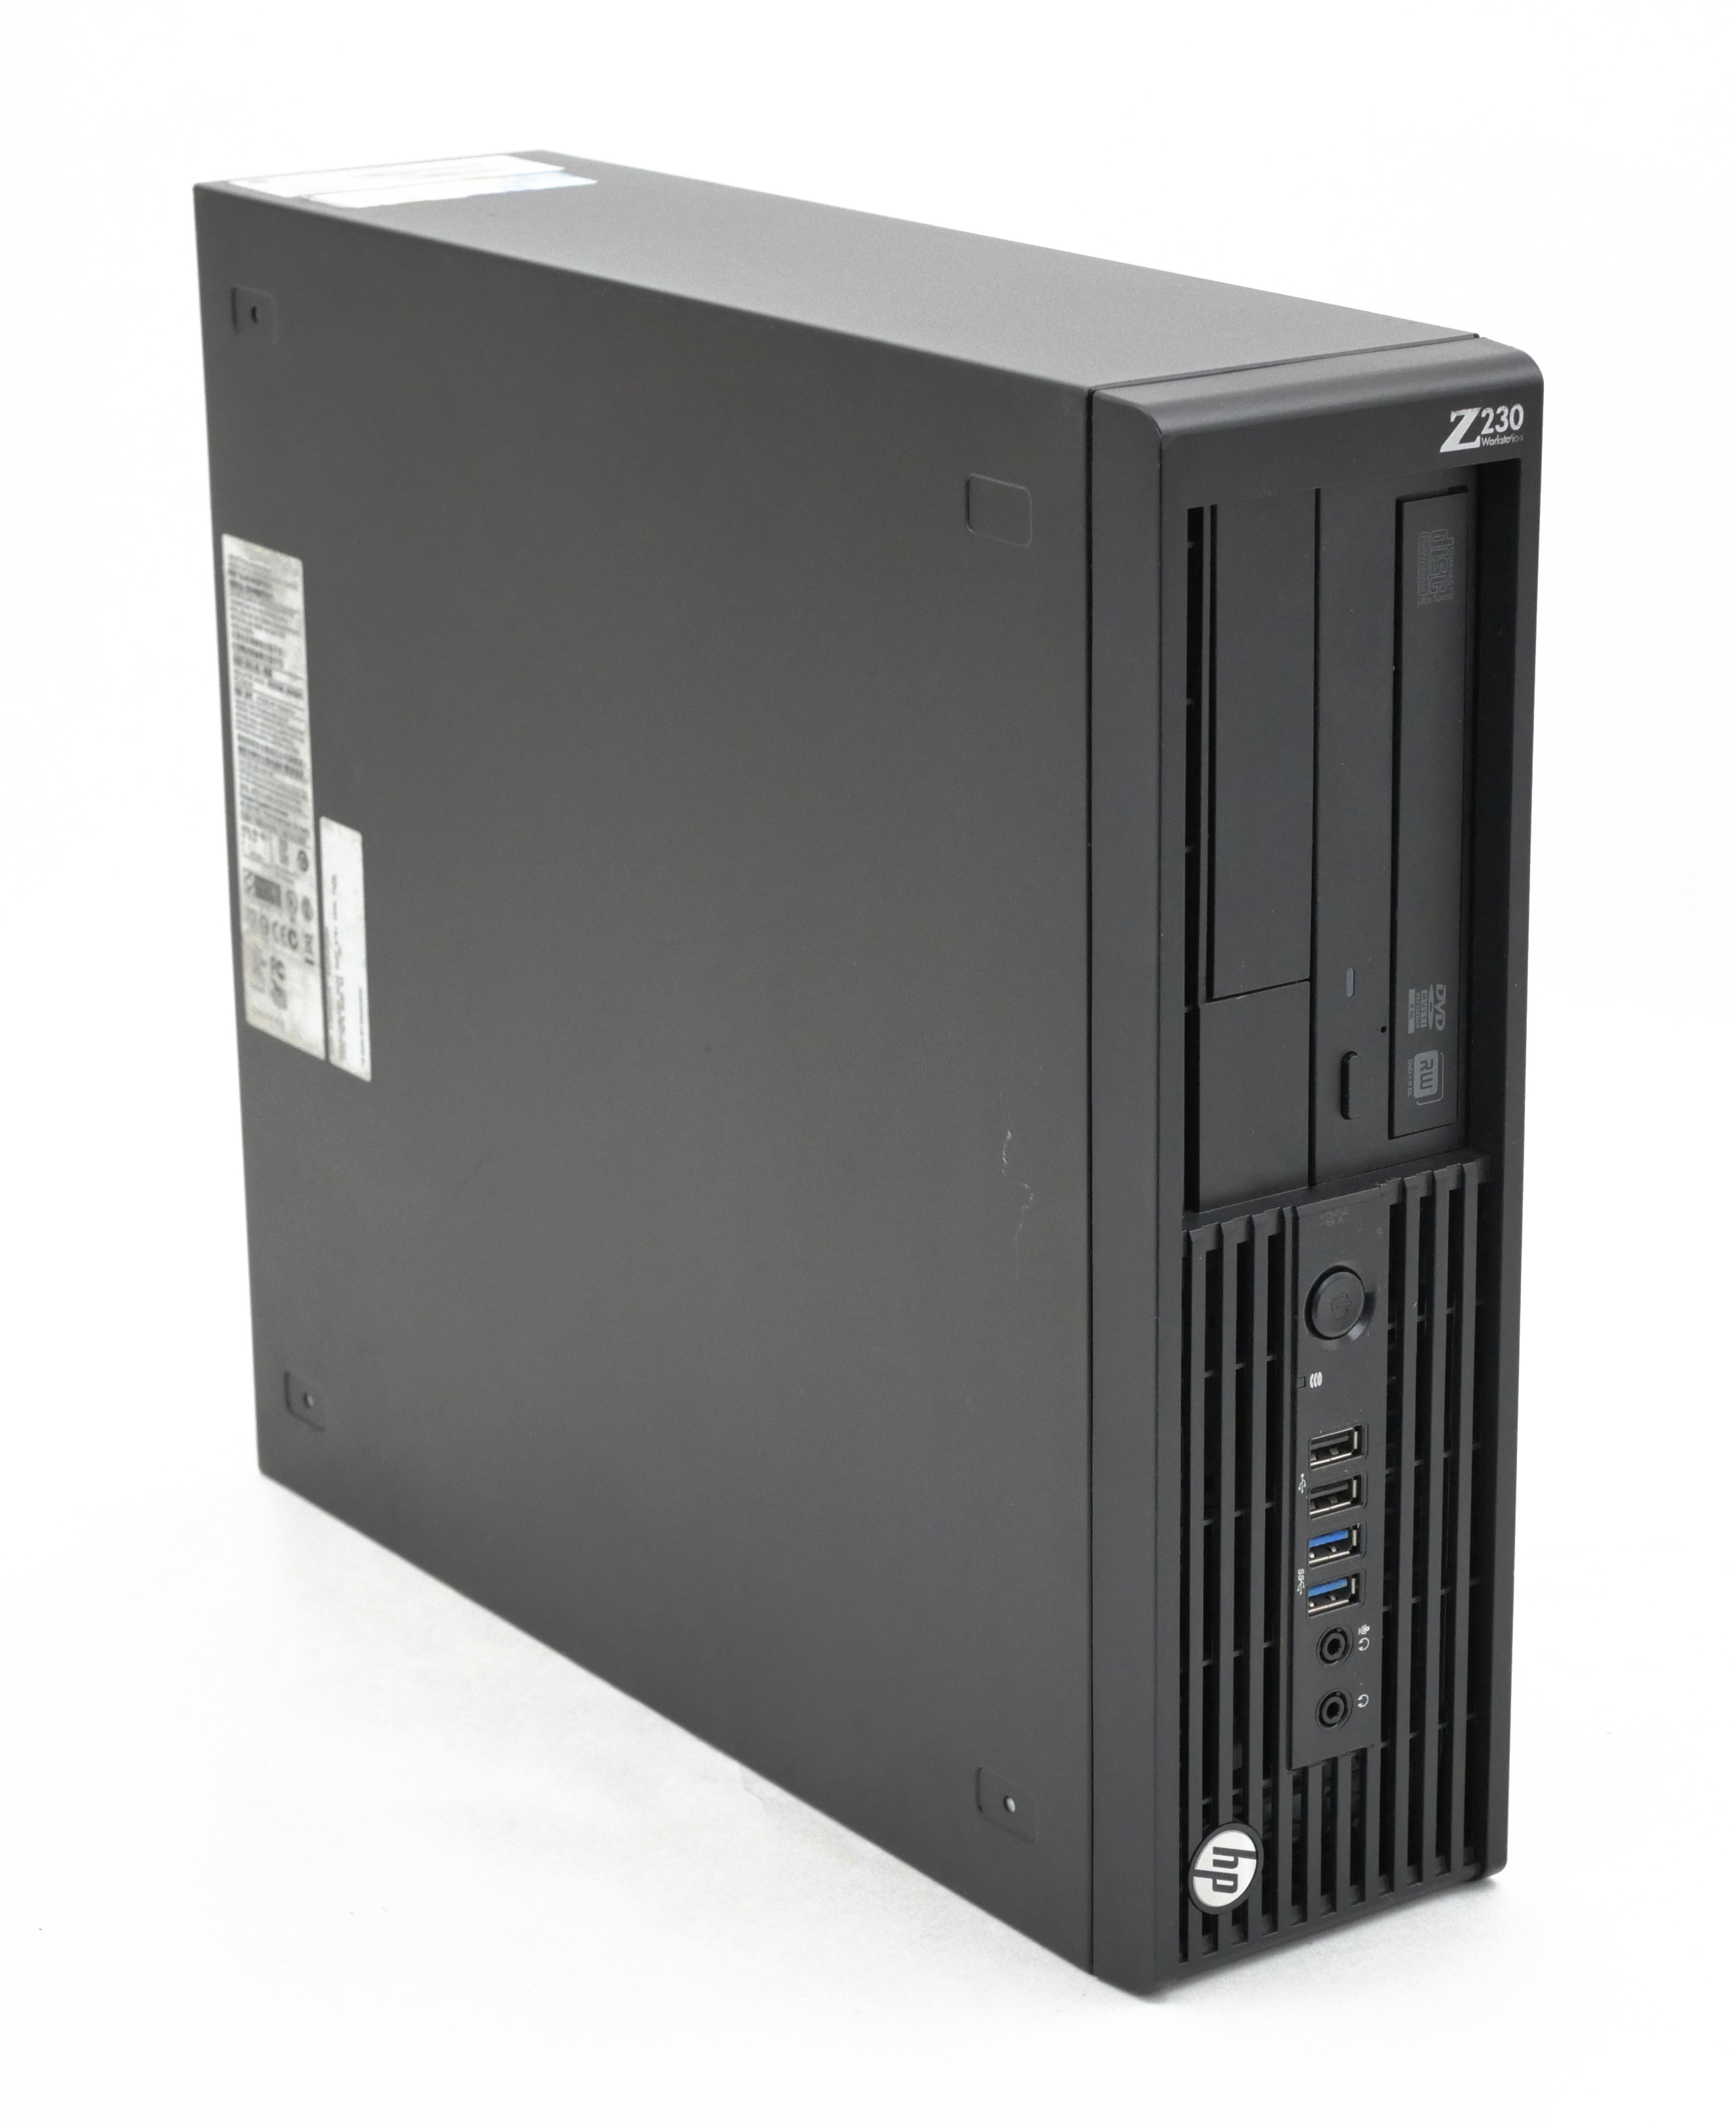 HP Z230 SFF Barebone with HS PSU DVD 717275-001